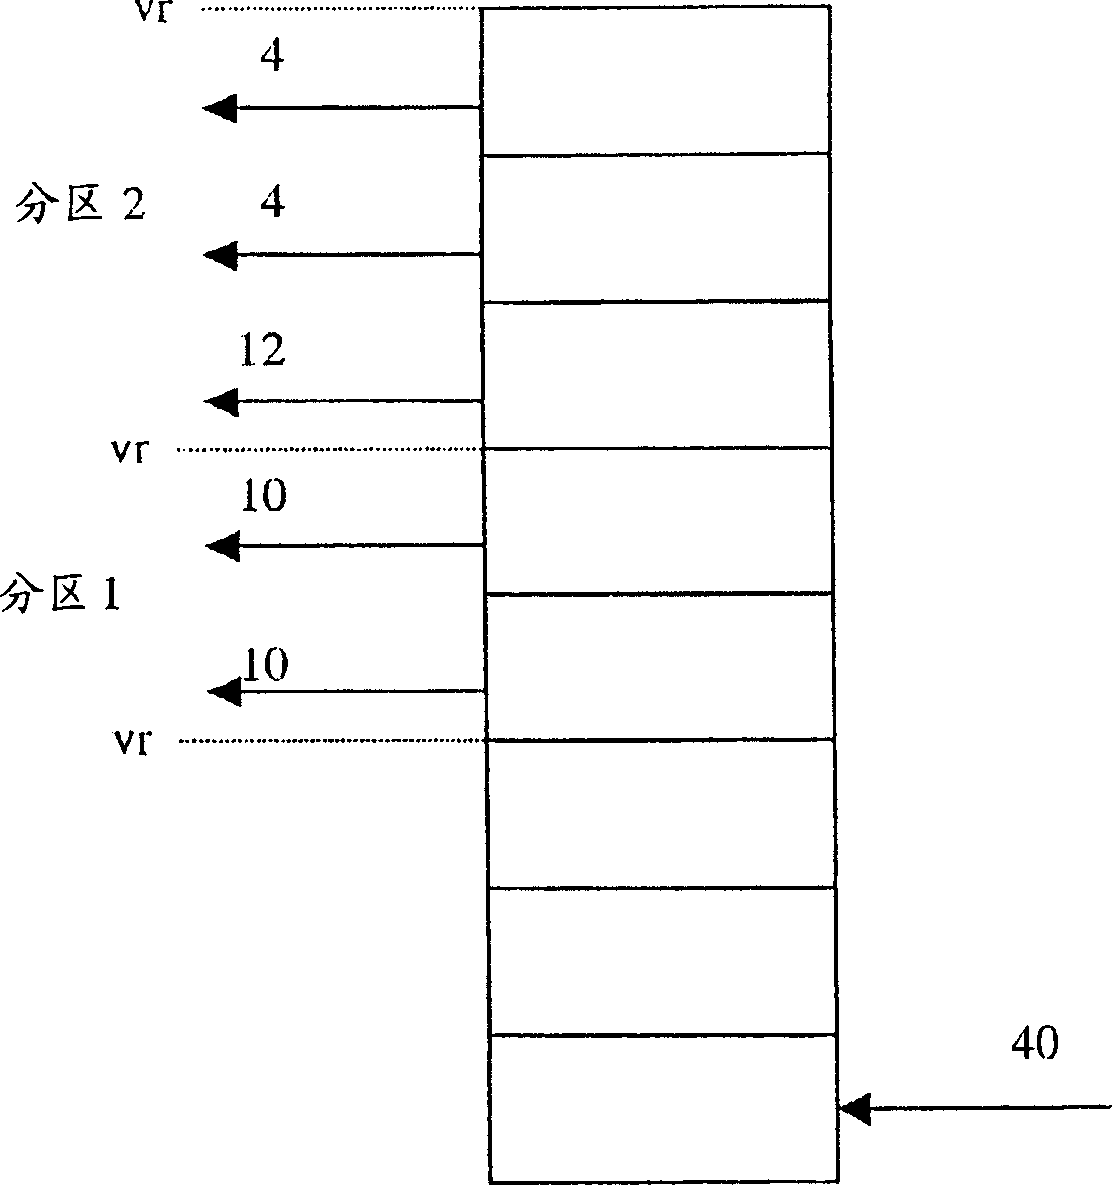 Elevator group control method